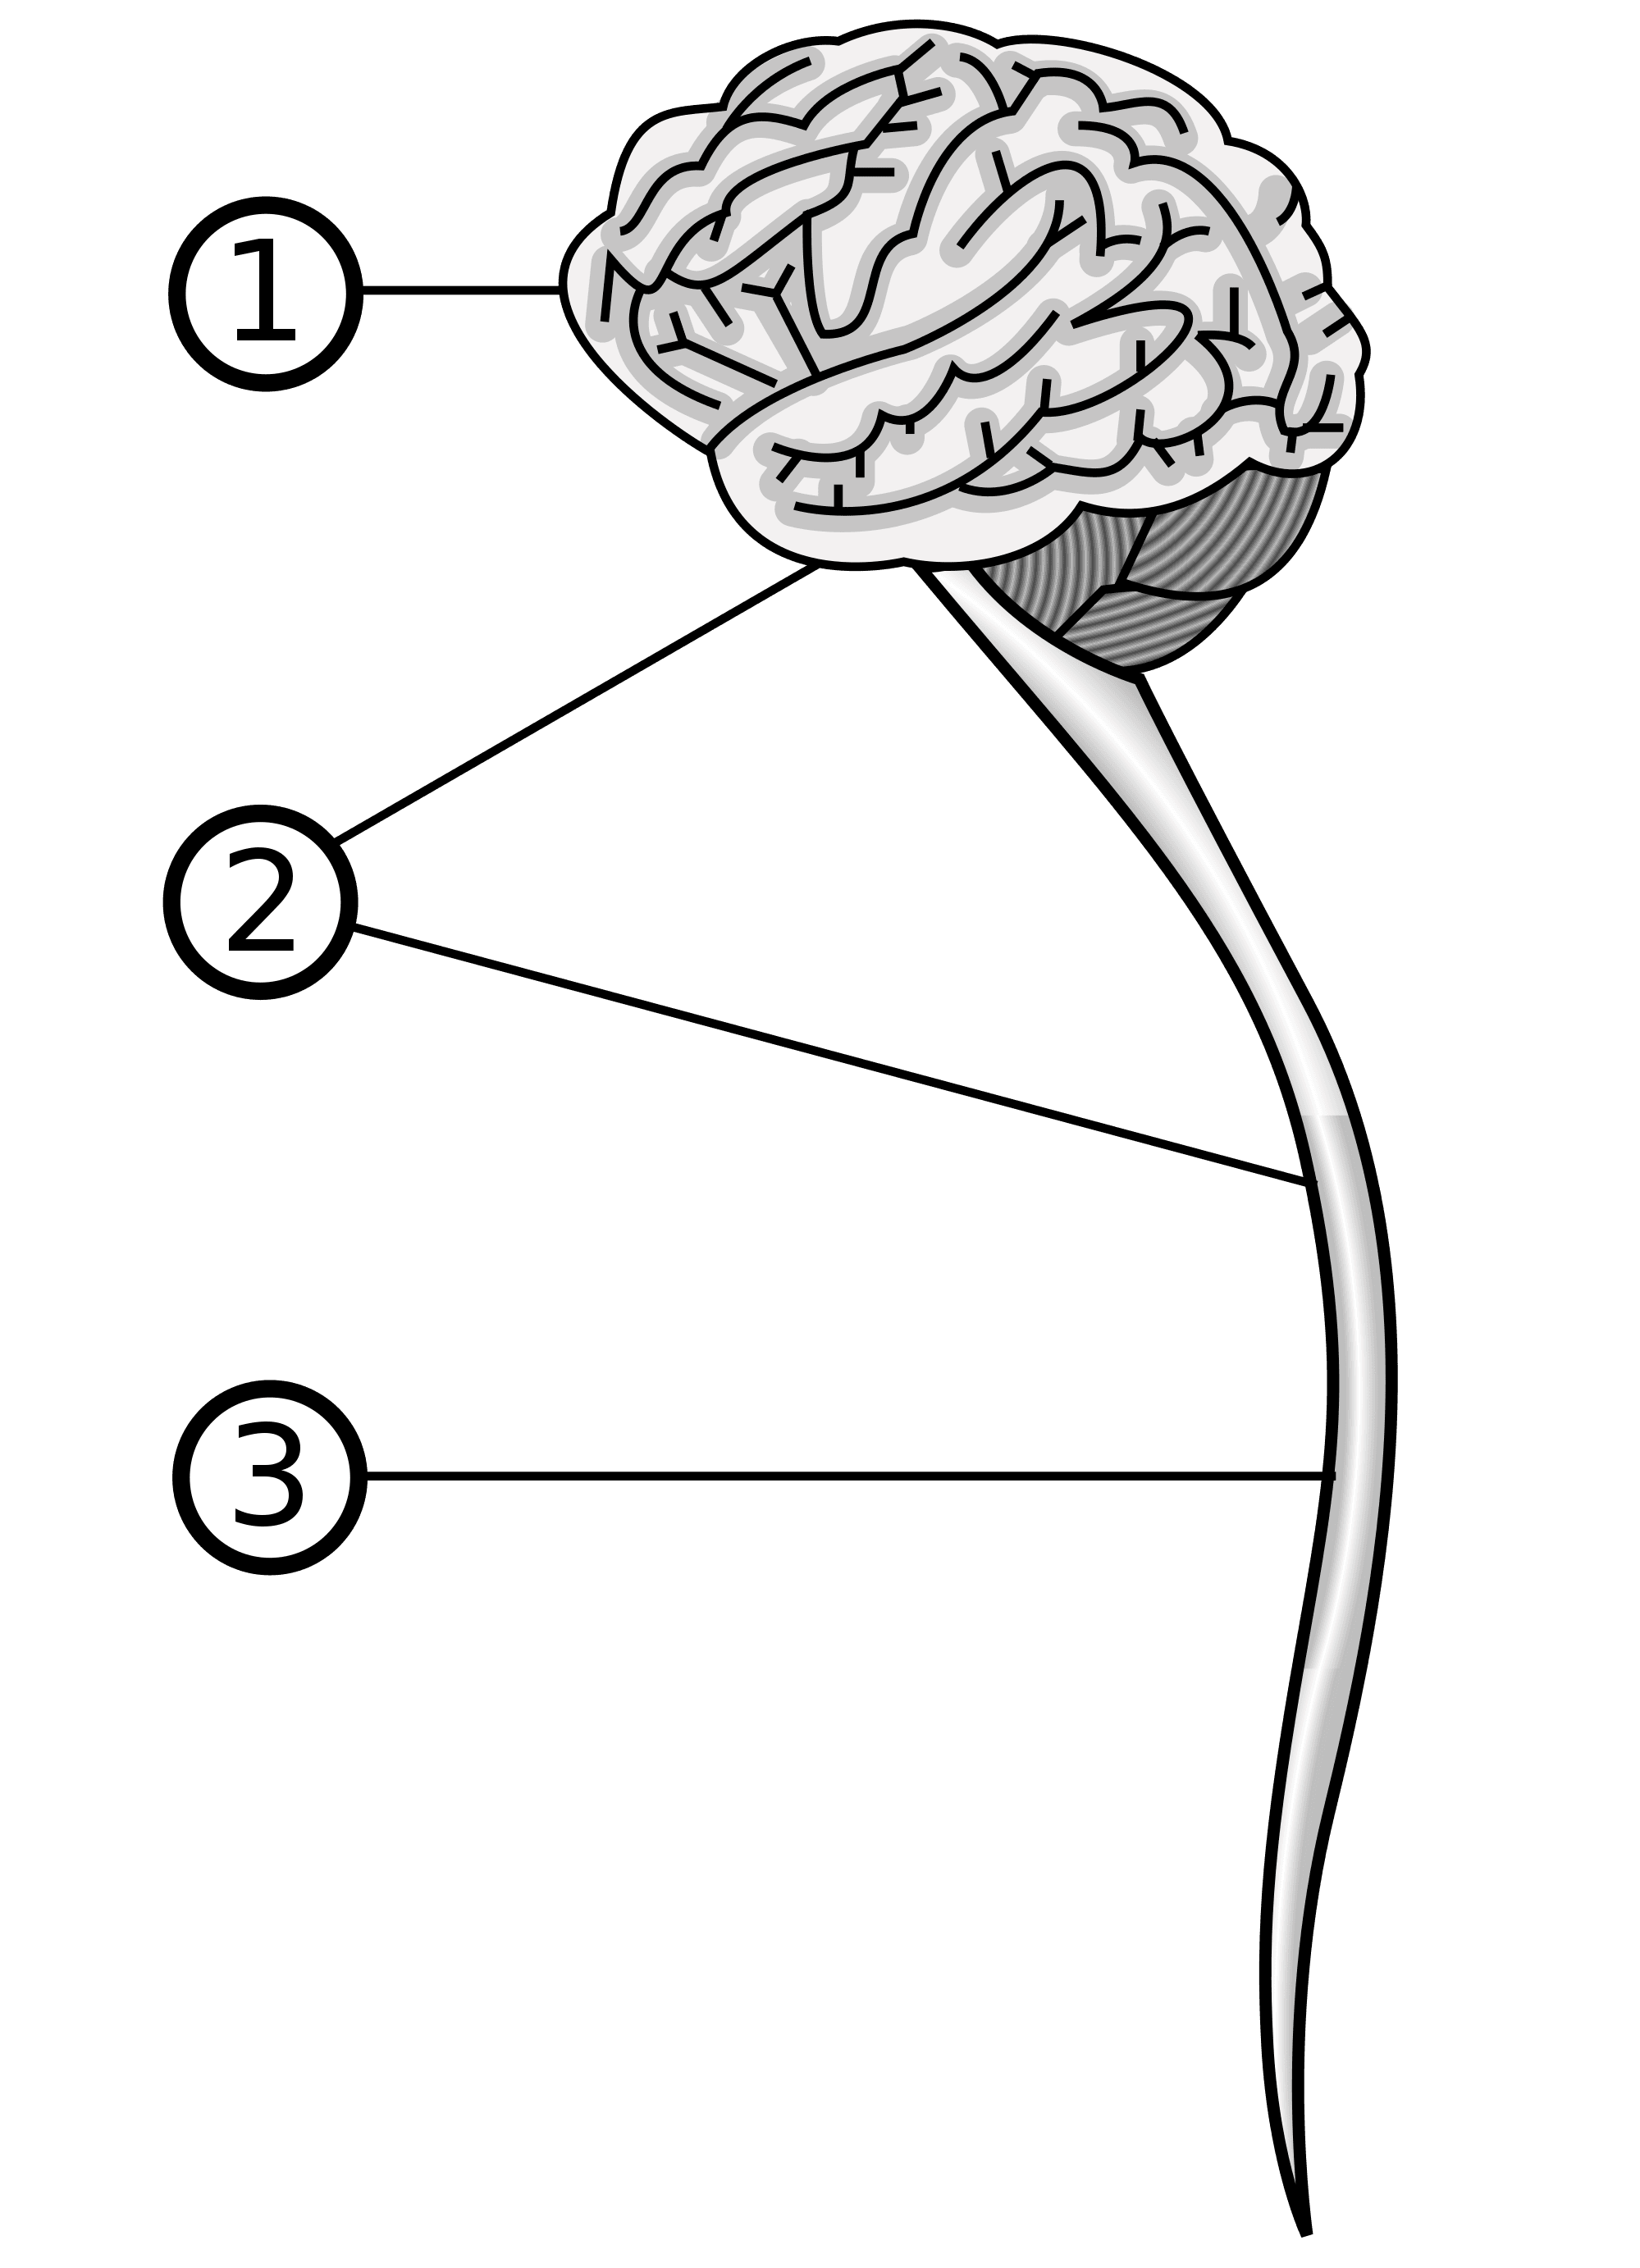 sistema-nervioso-central